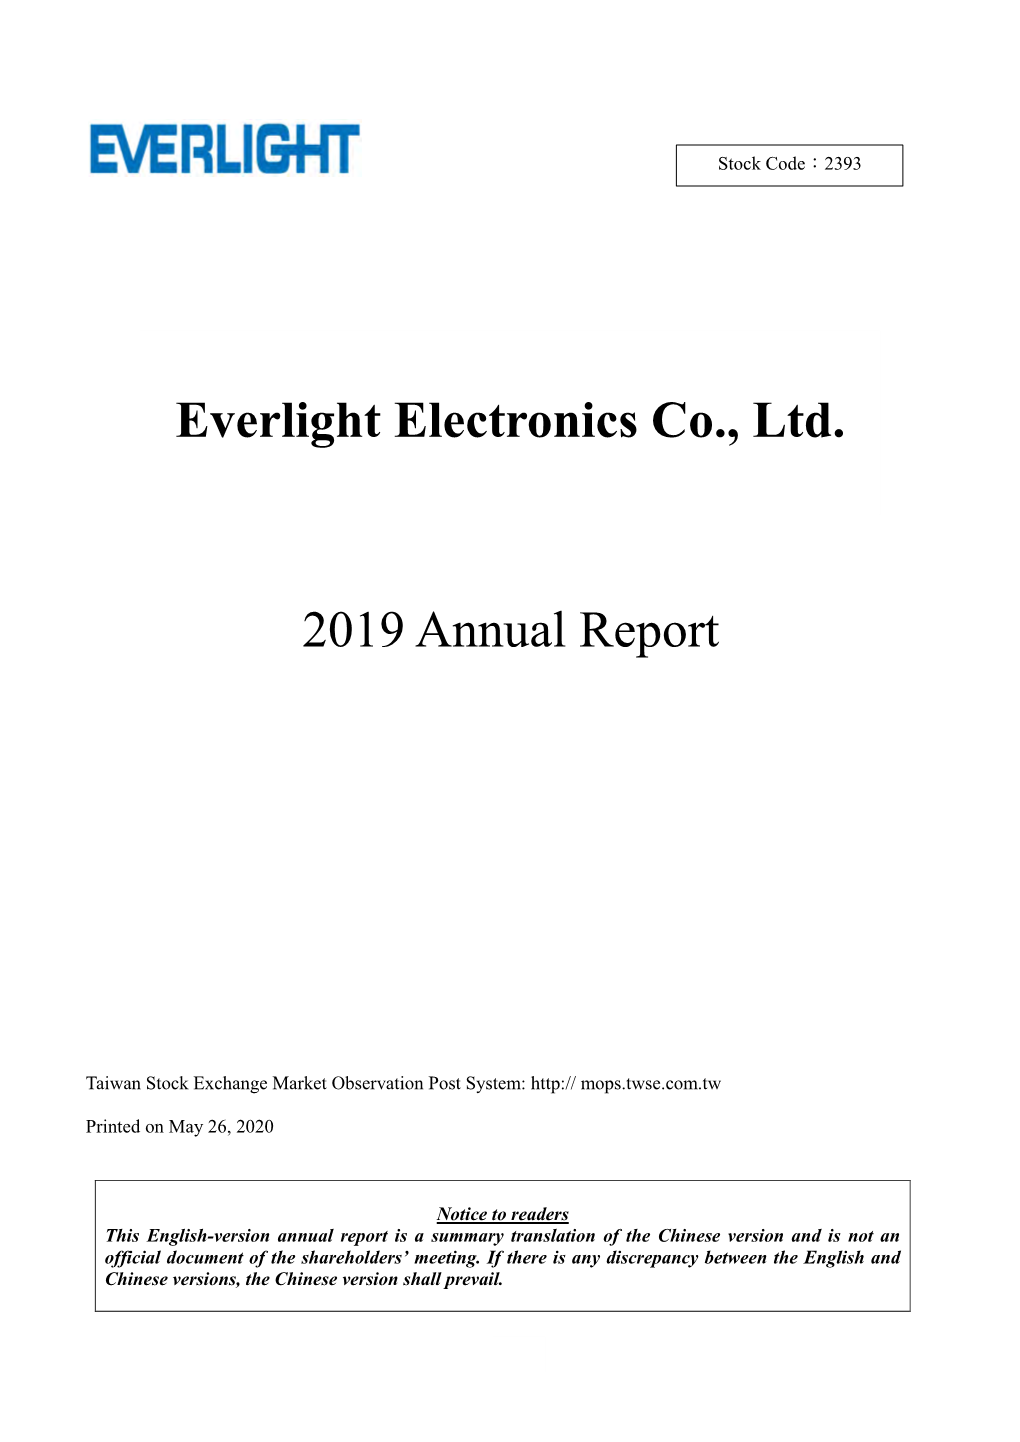 Everlight Electronics Co., Ltd. 2019 Annual Report